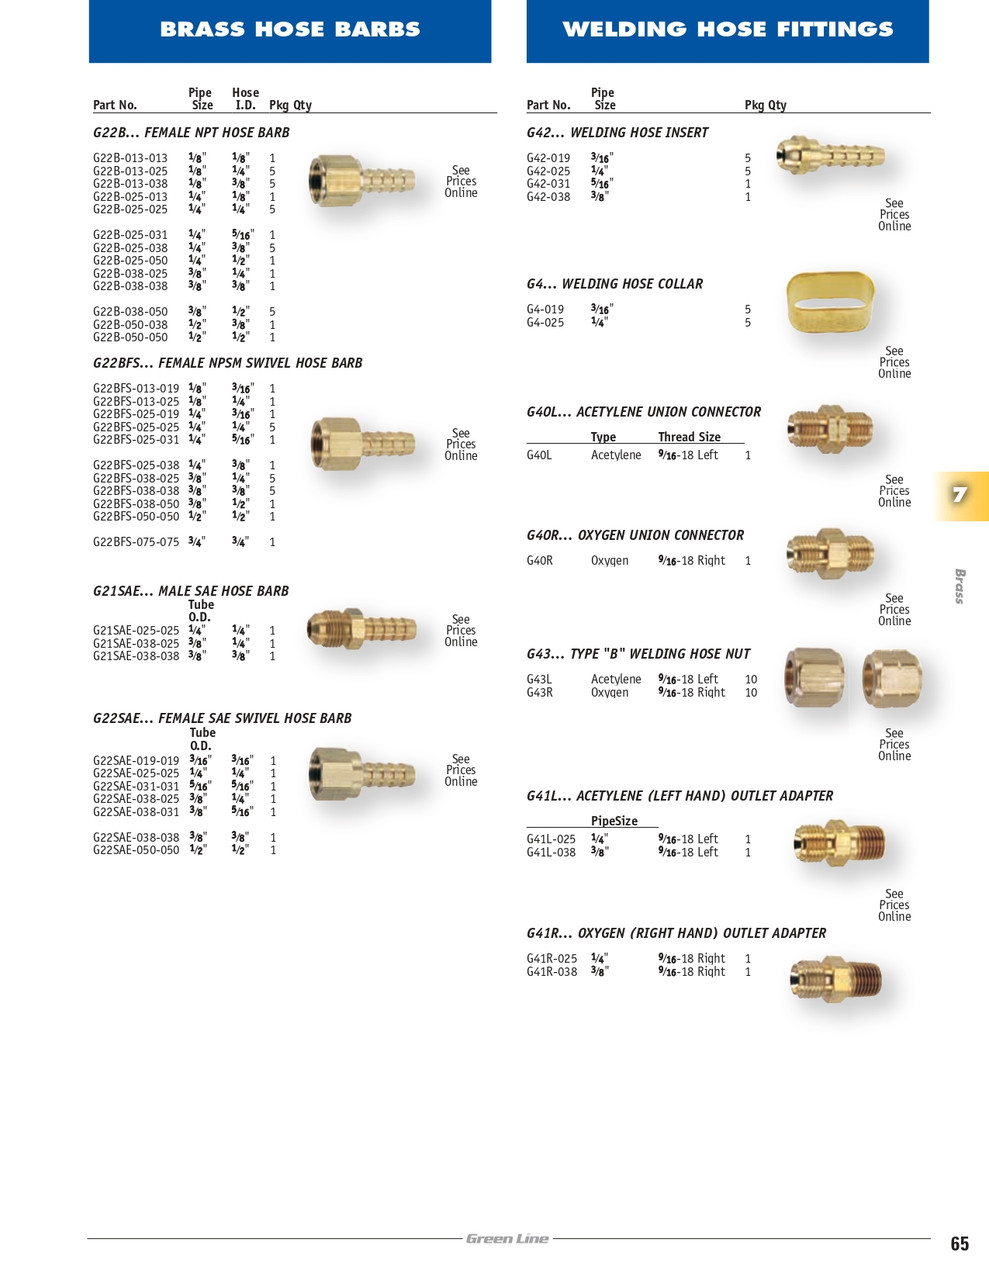 3/4 x 3/4" Brass Hose Barb - Female NPSM Connector   G22BFS-075-075